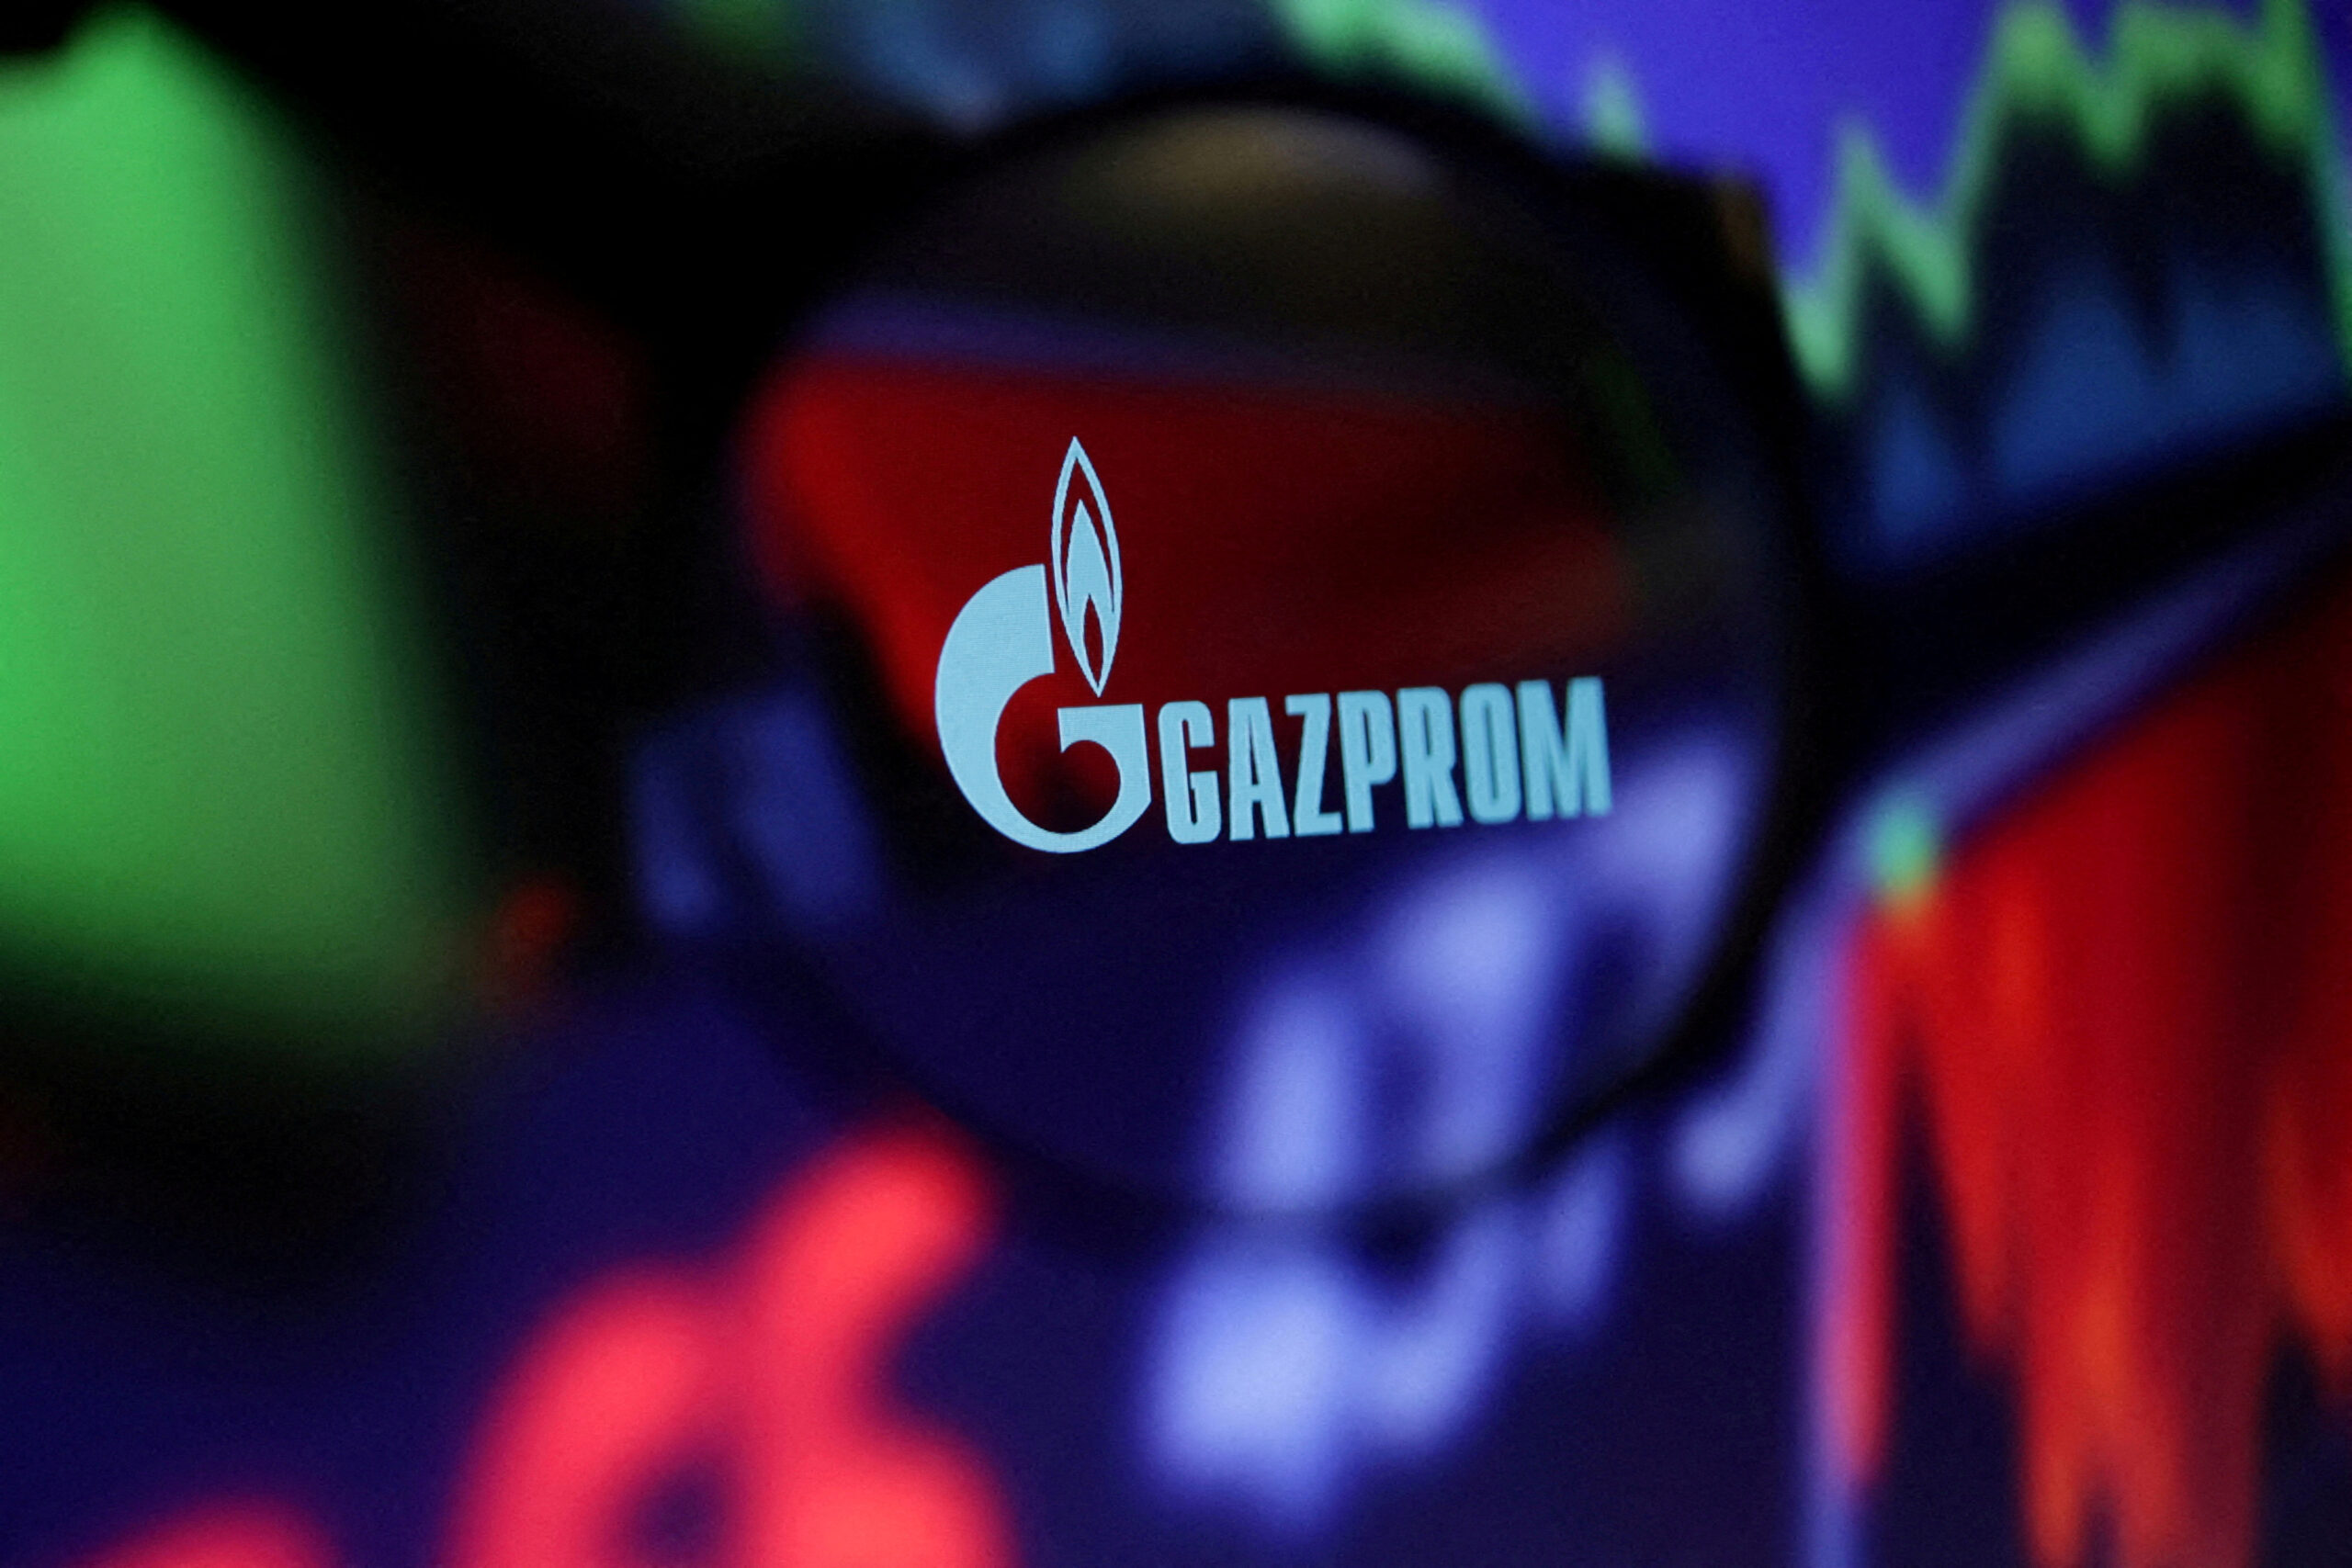 FILE PHOTO: FILE PHOTO: Illustration shows Gazprom logo and stock graph